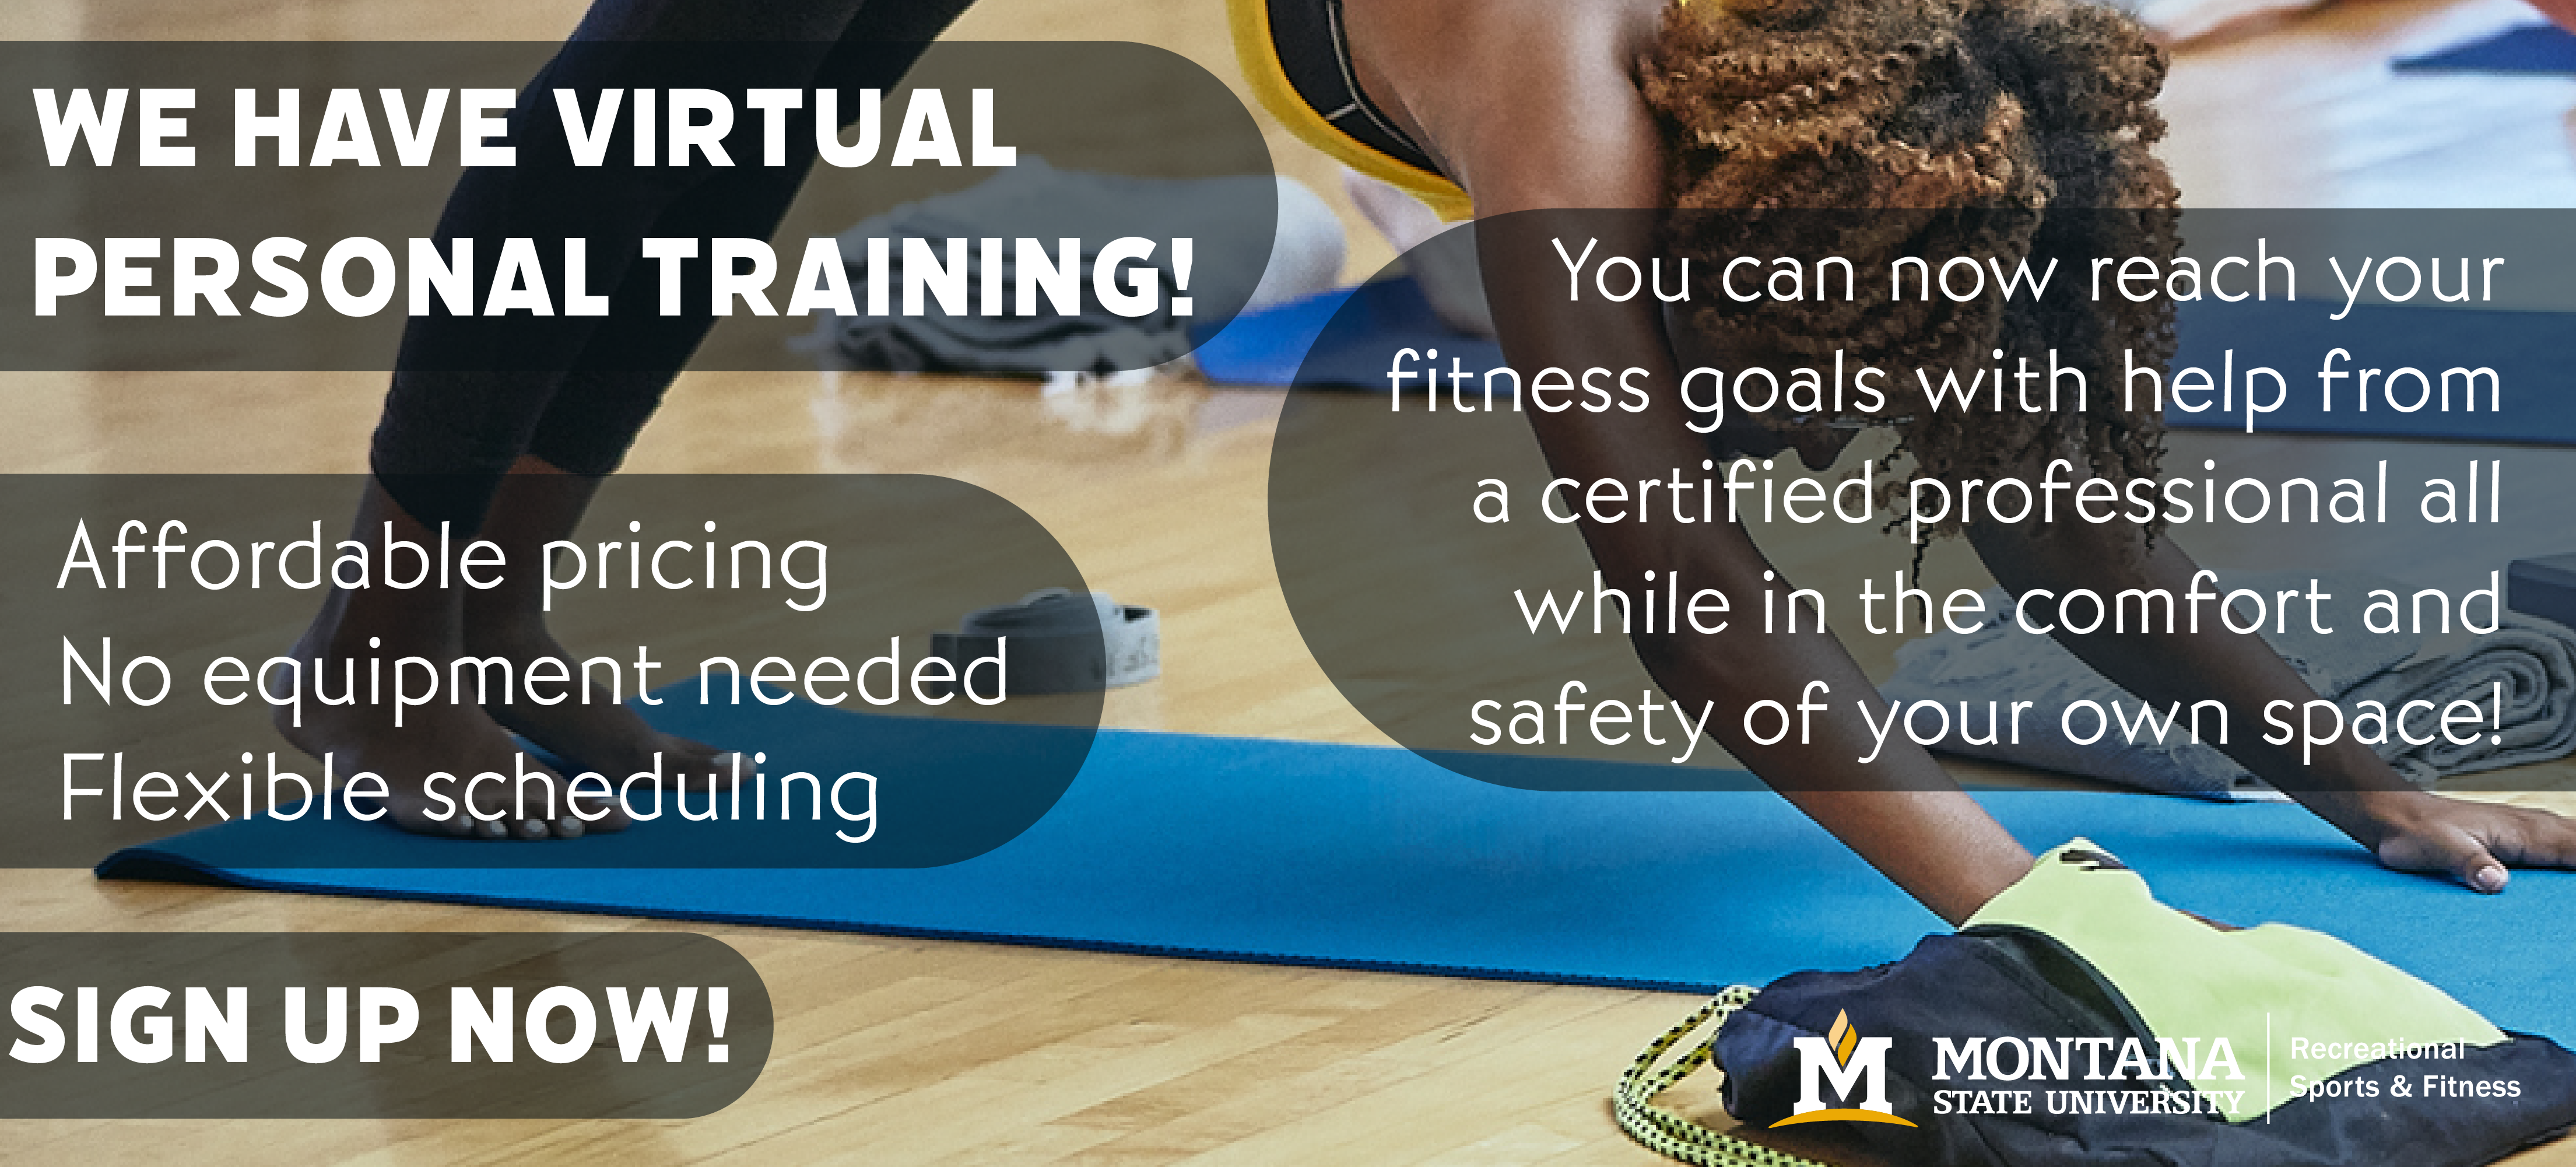 Personal Training Miami 33156, 33157, 33176, 33178, - Weight Loss Programs  - Precision Personal Training